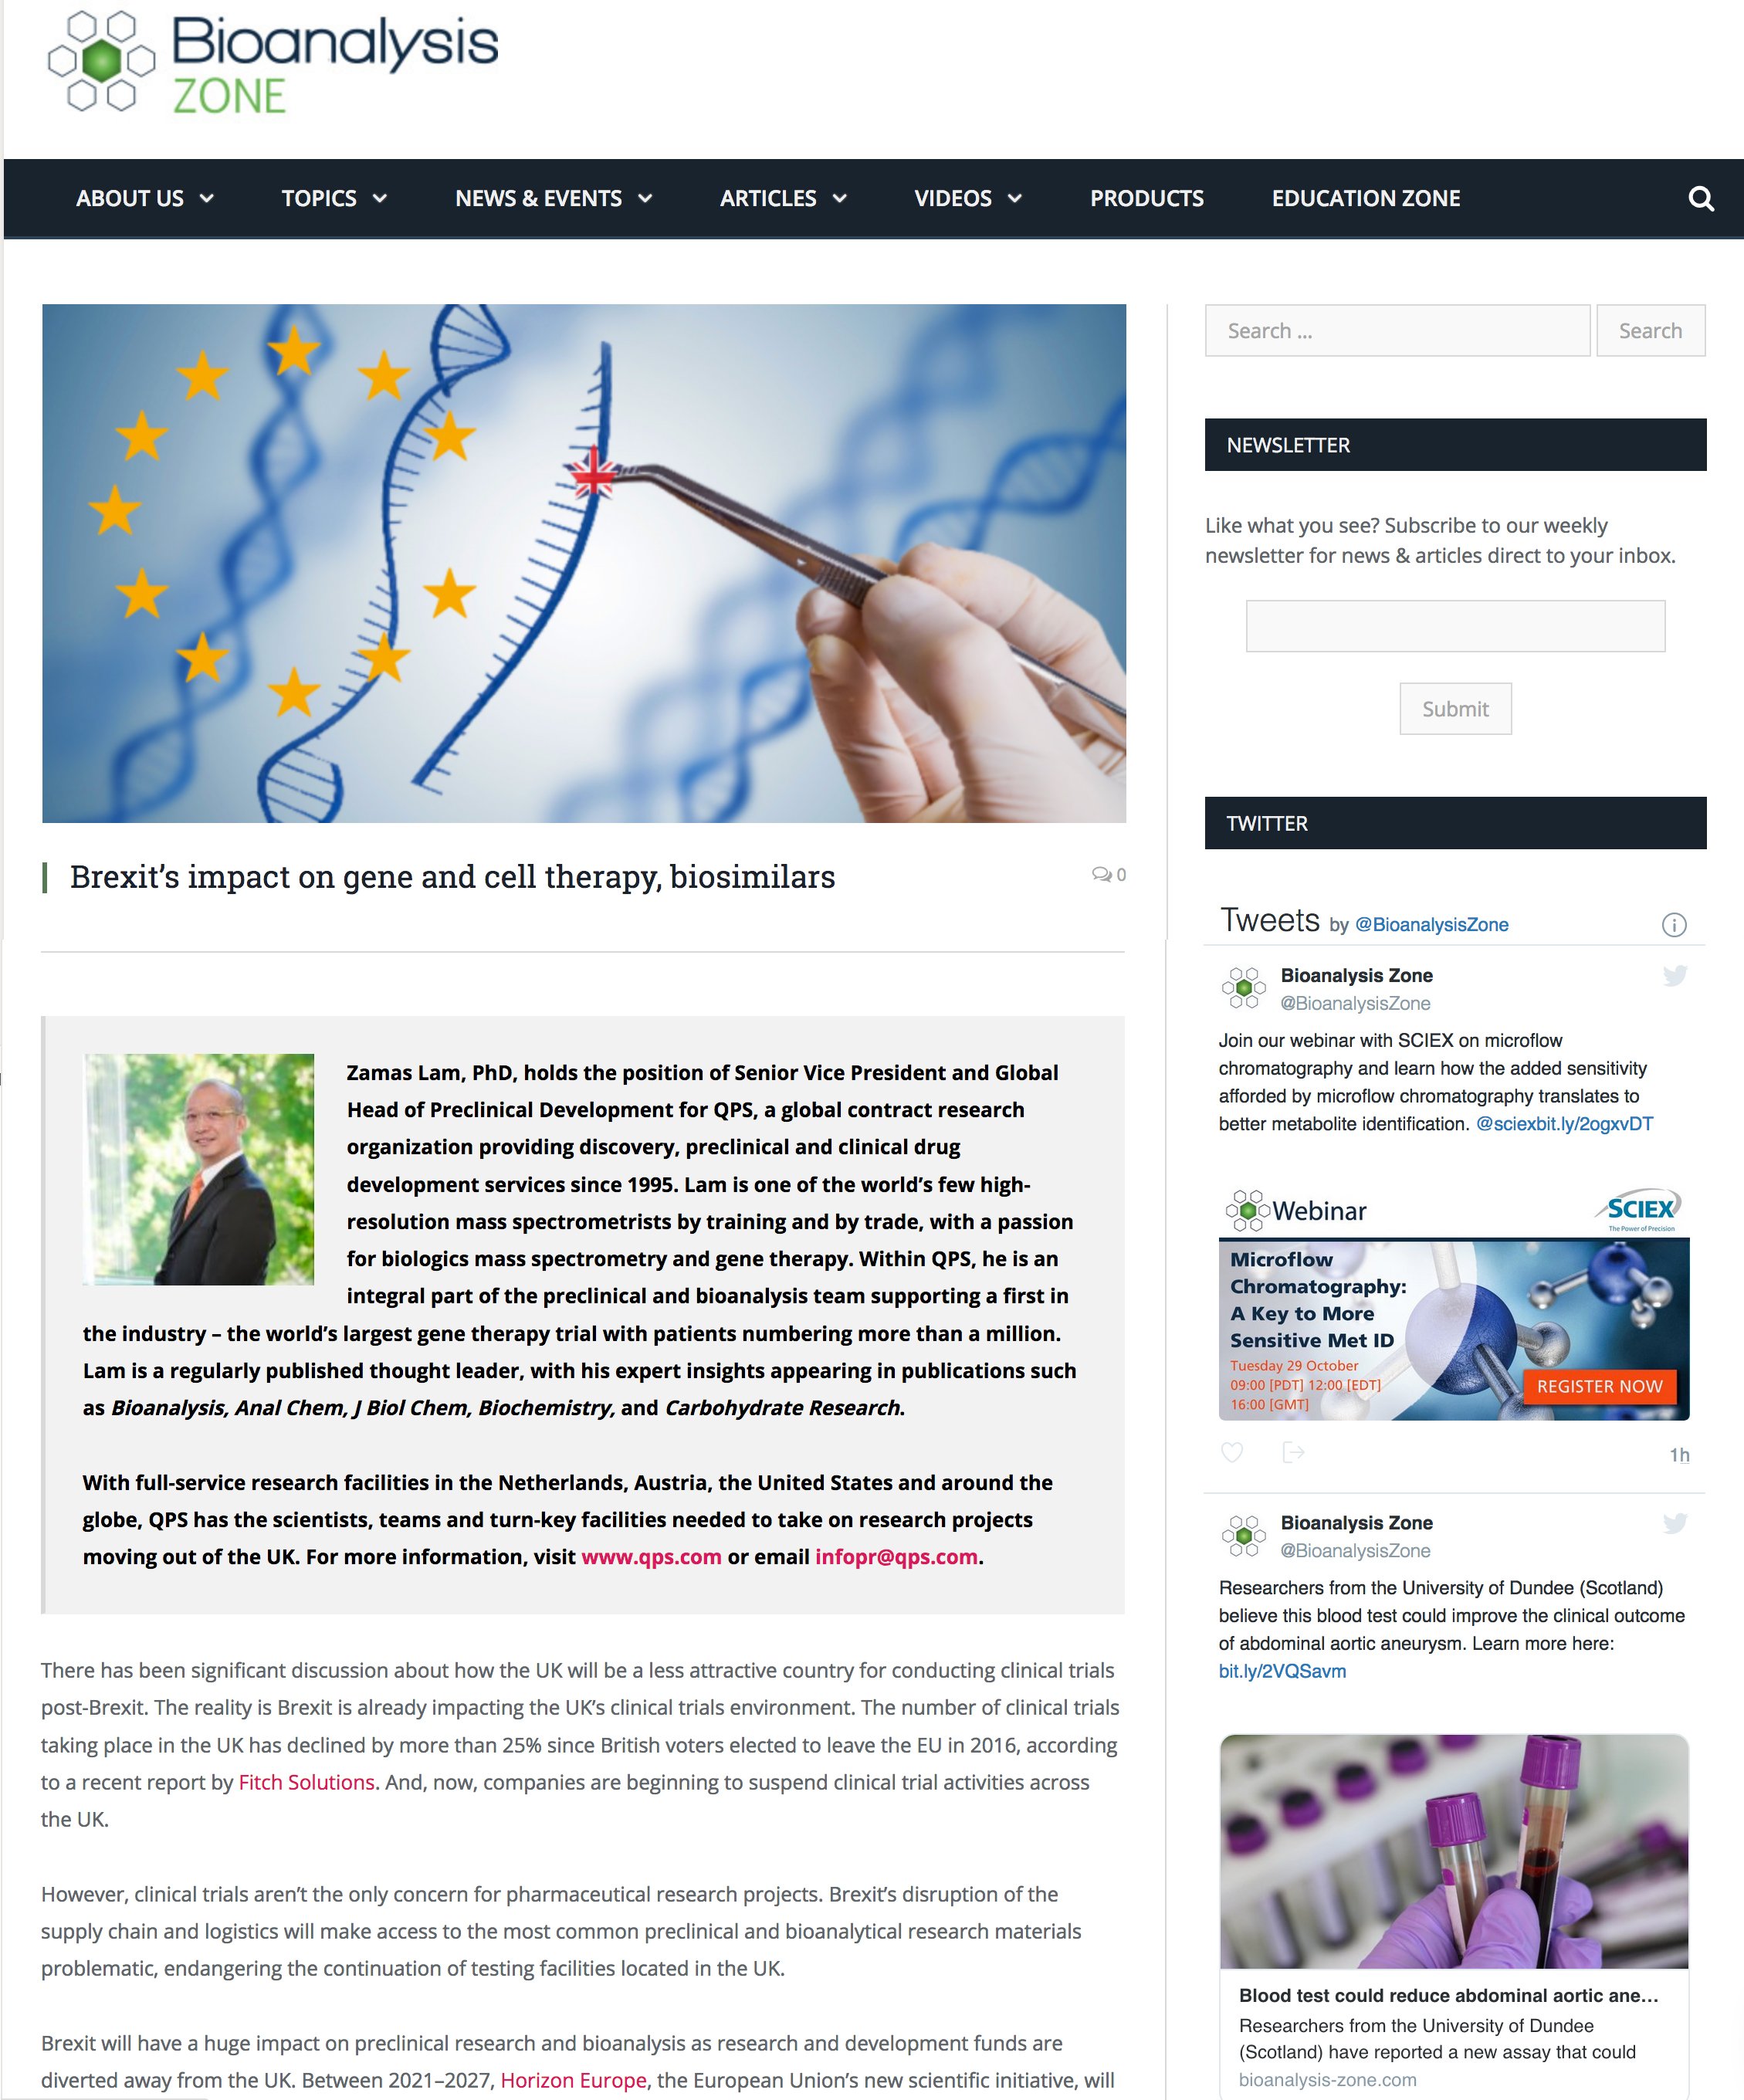 JONESblog-nov21-2019-qps-bioanalysis